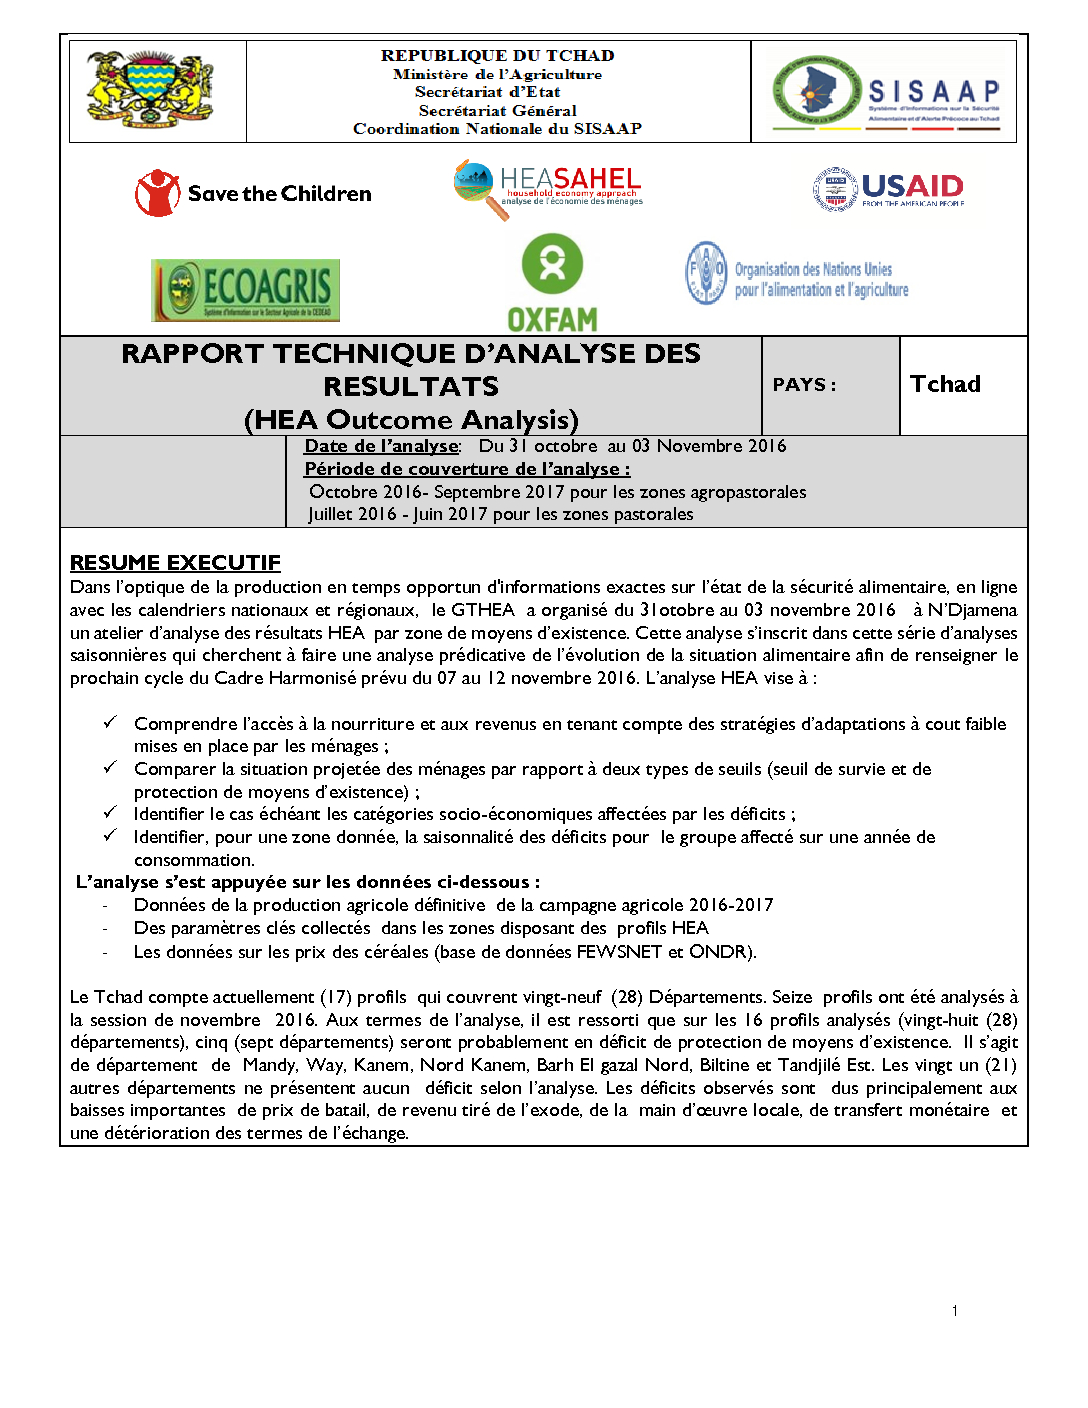 Rapport Analyse Resultats - Tchad - Novembre 2016